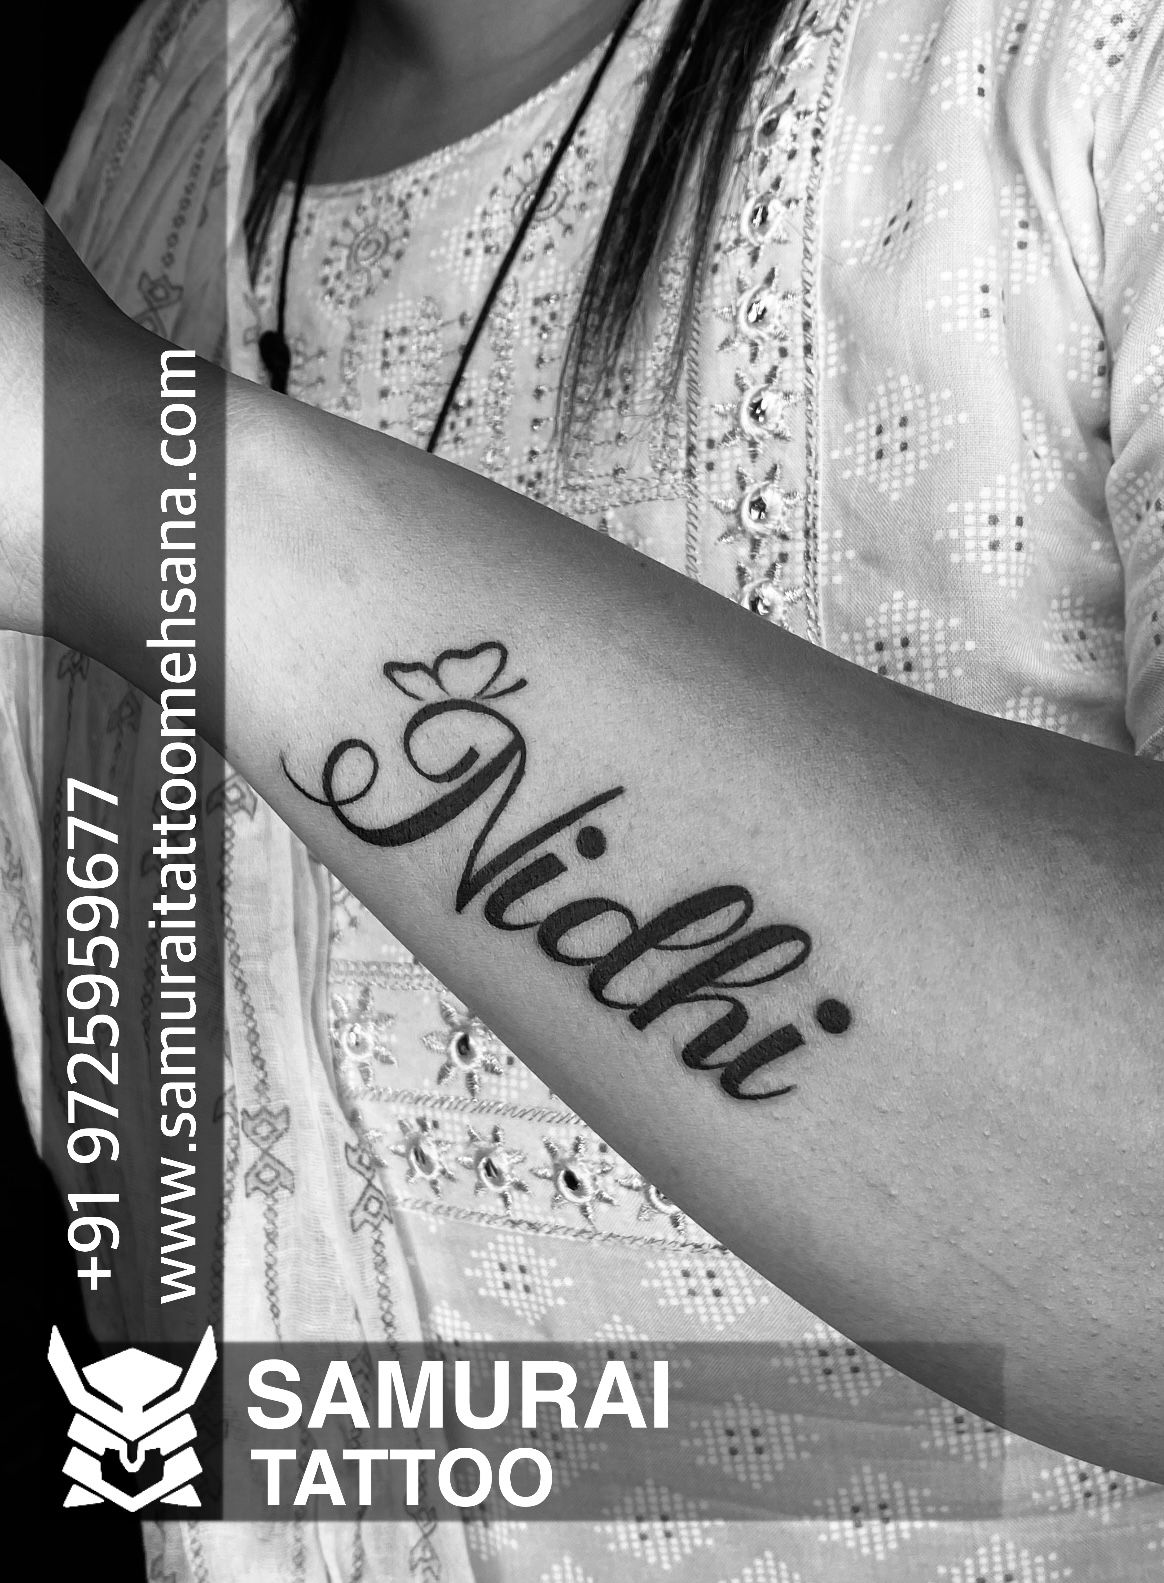 Tattoo uploaded by Vipul Chaudhary • Smit name tattoo |Smit tattoo |Smit  tattoo ideas |Smit name tattoo ideas • Tattoodo